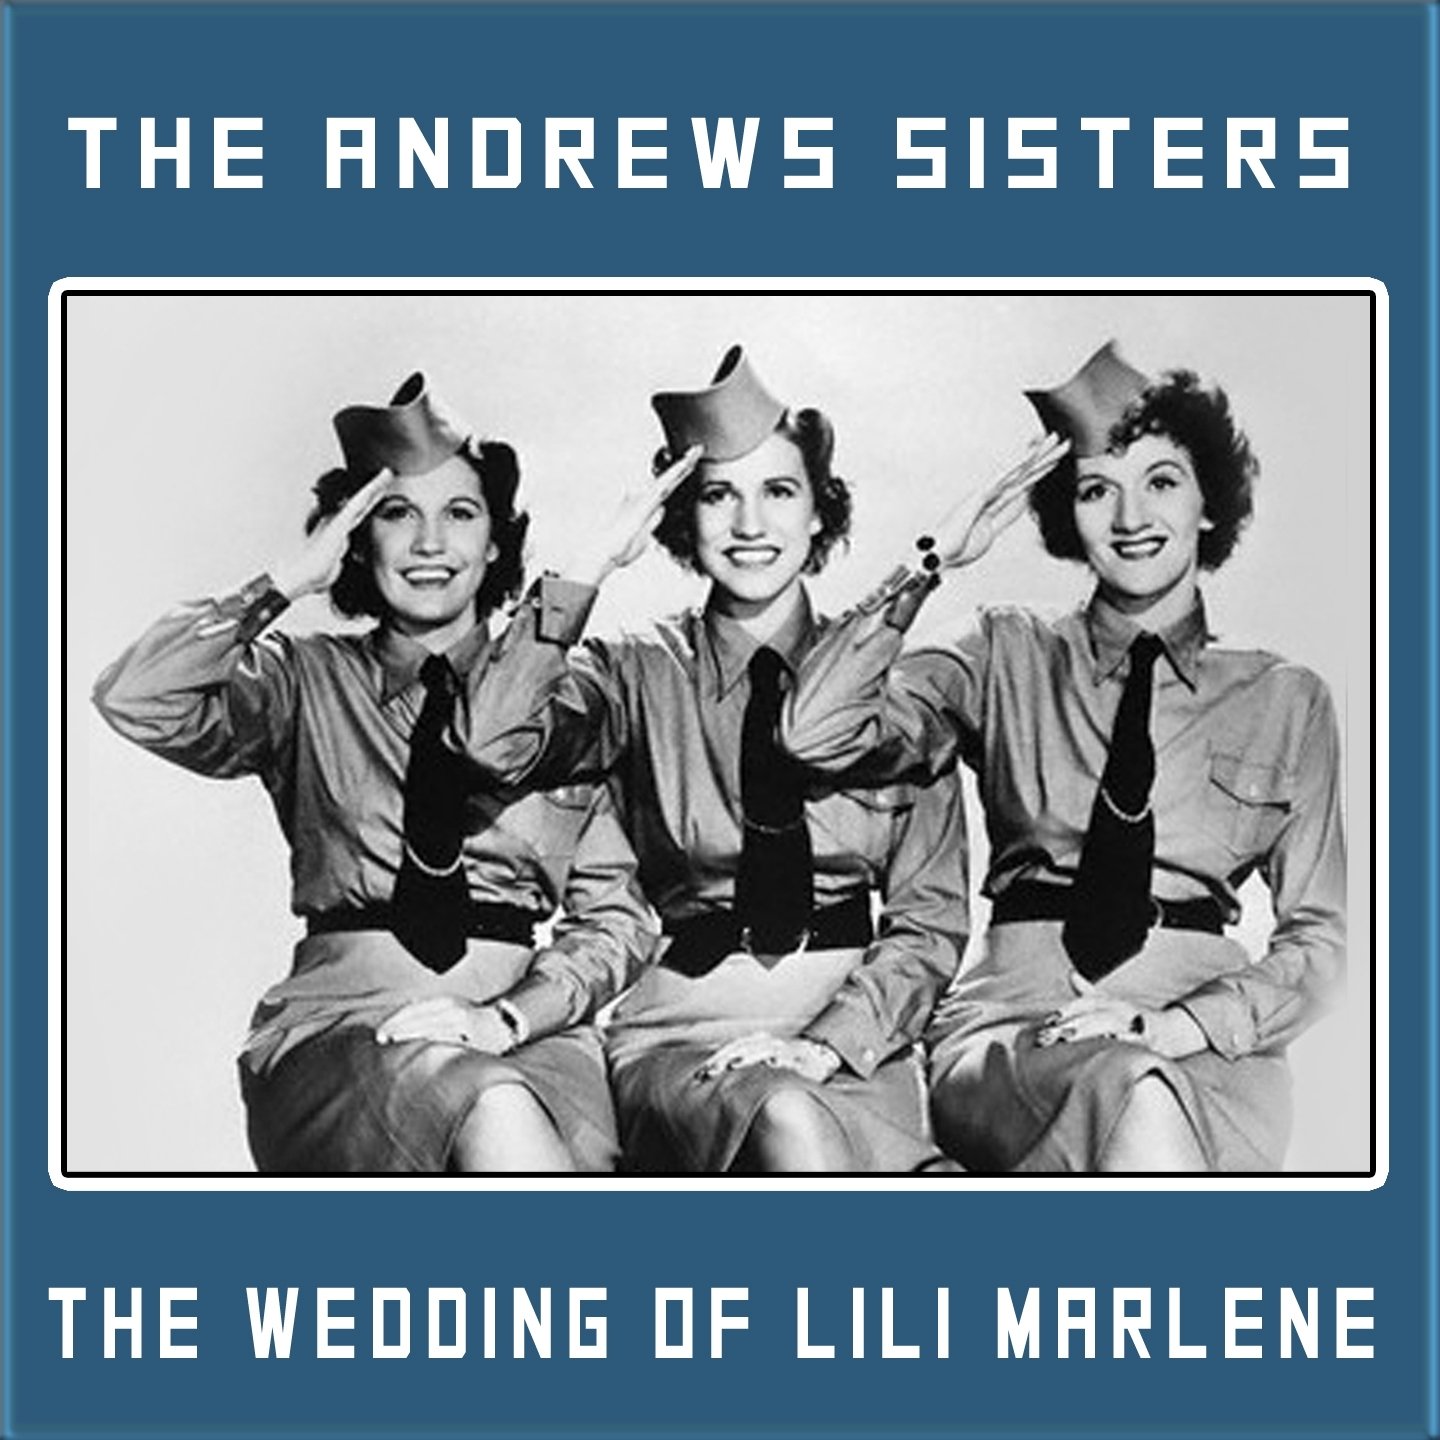 Andrew's sisters. Сестры Эндрюс. Сестры Эндрюс Синг. The Andrews sisters в старости. The Andrews sisters фото.